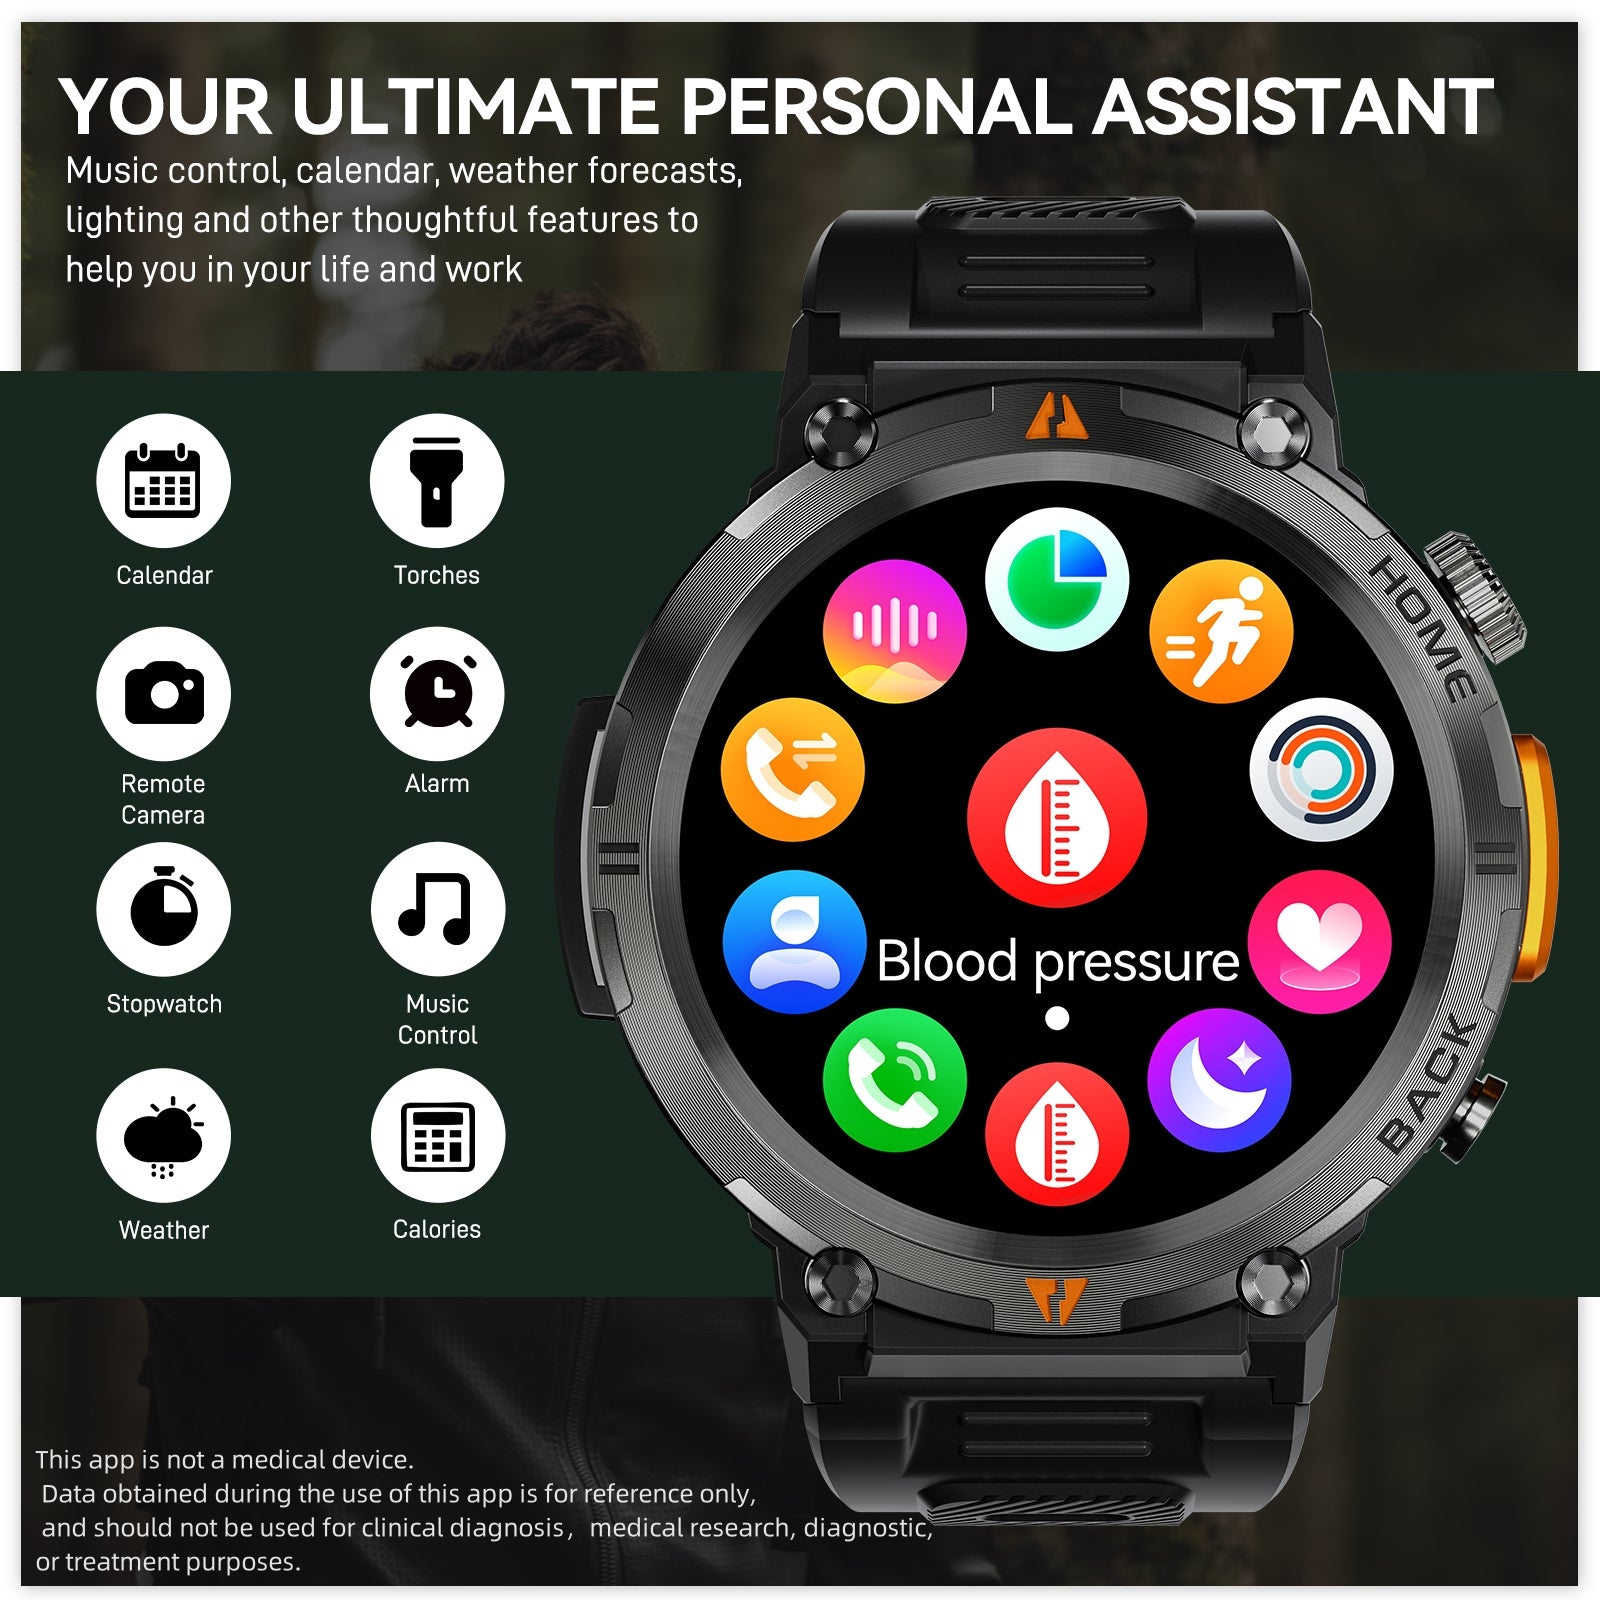 The EIGIIS KE3 Smartwatch - A Watch Designed to Meet People's Needs